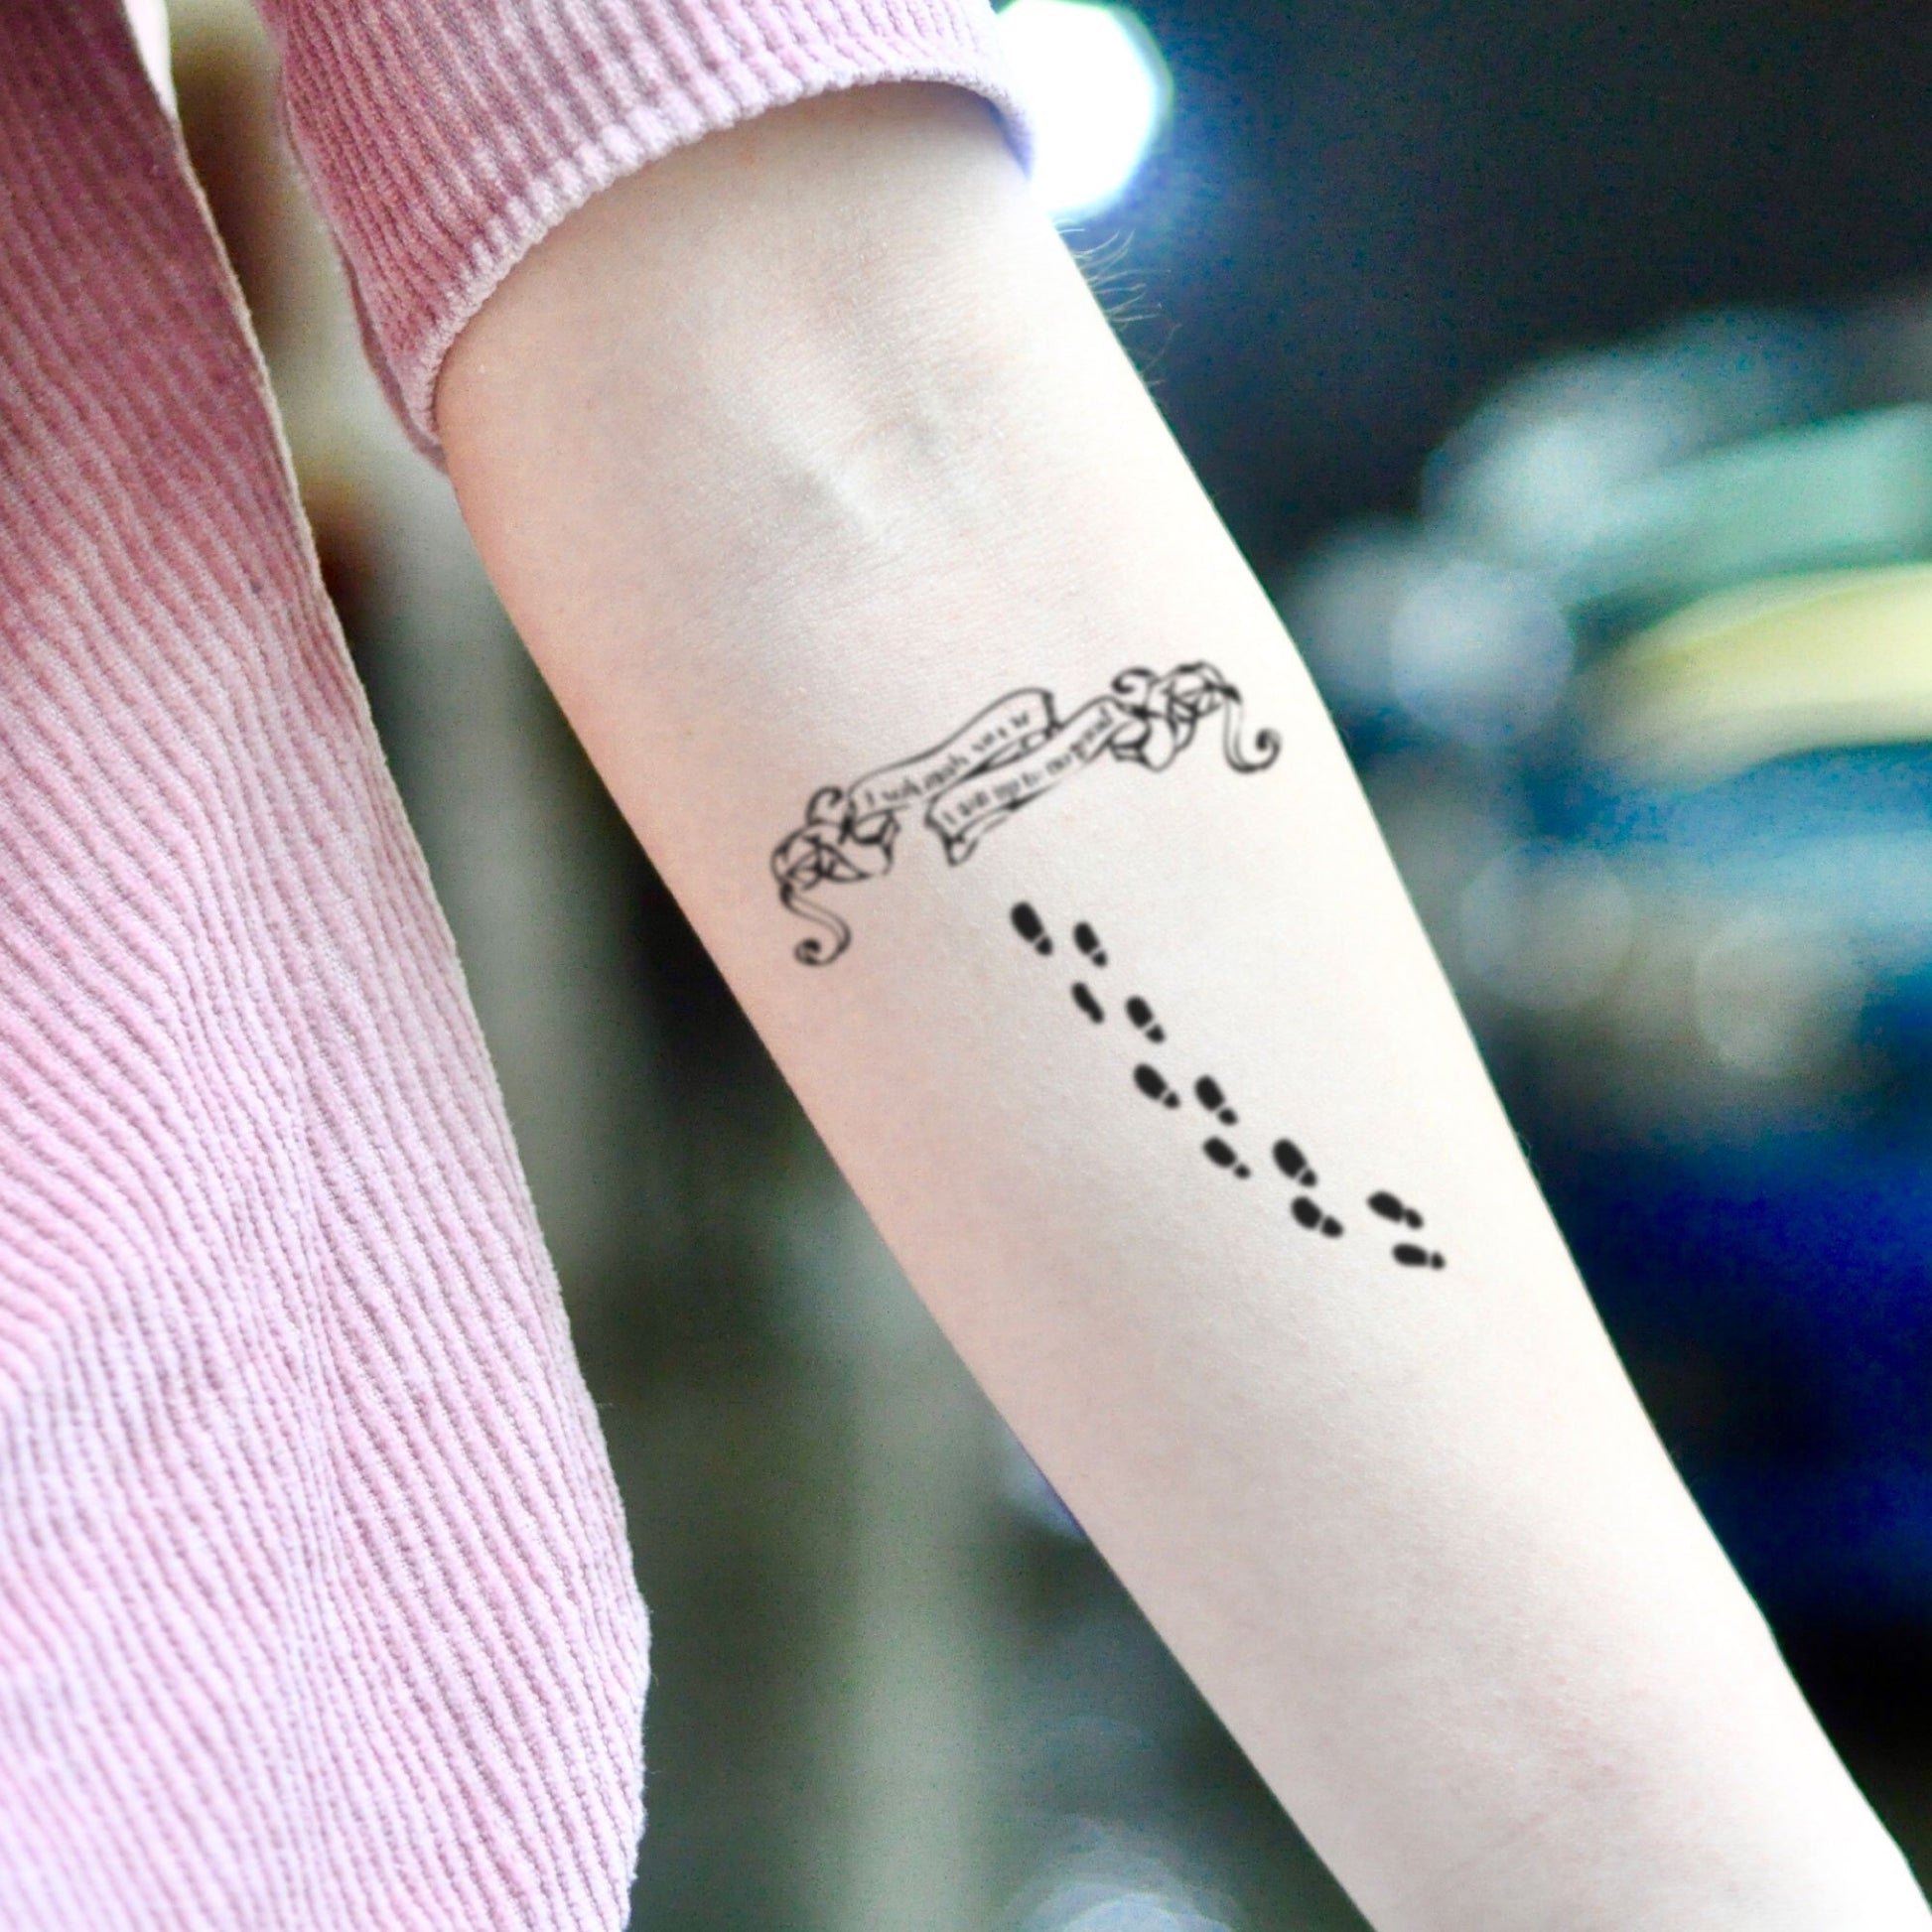 fake small marauders map harry potter illustrative temporary tattoo sticker design idea on inner arm